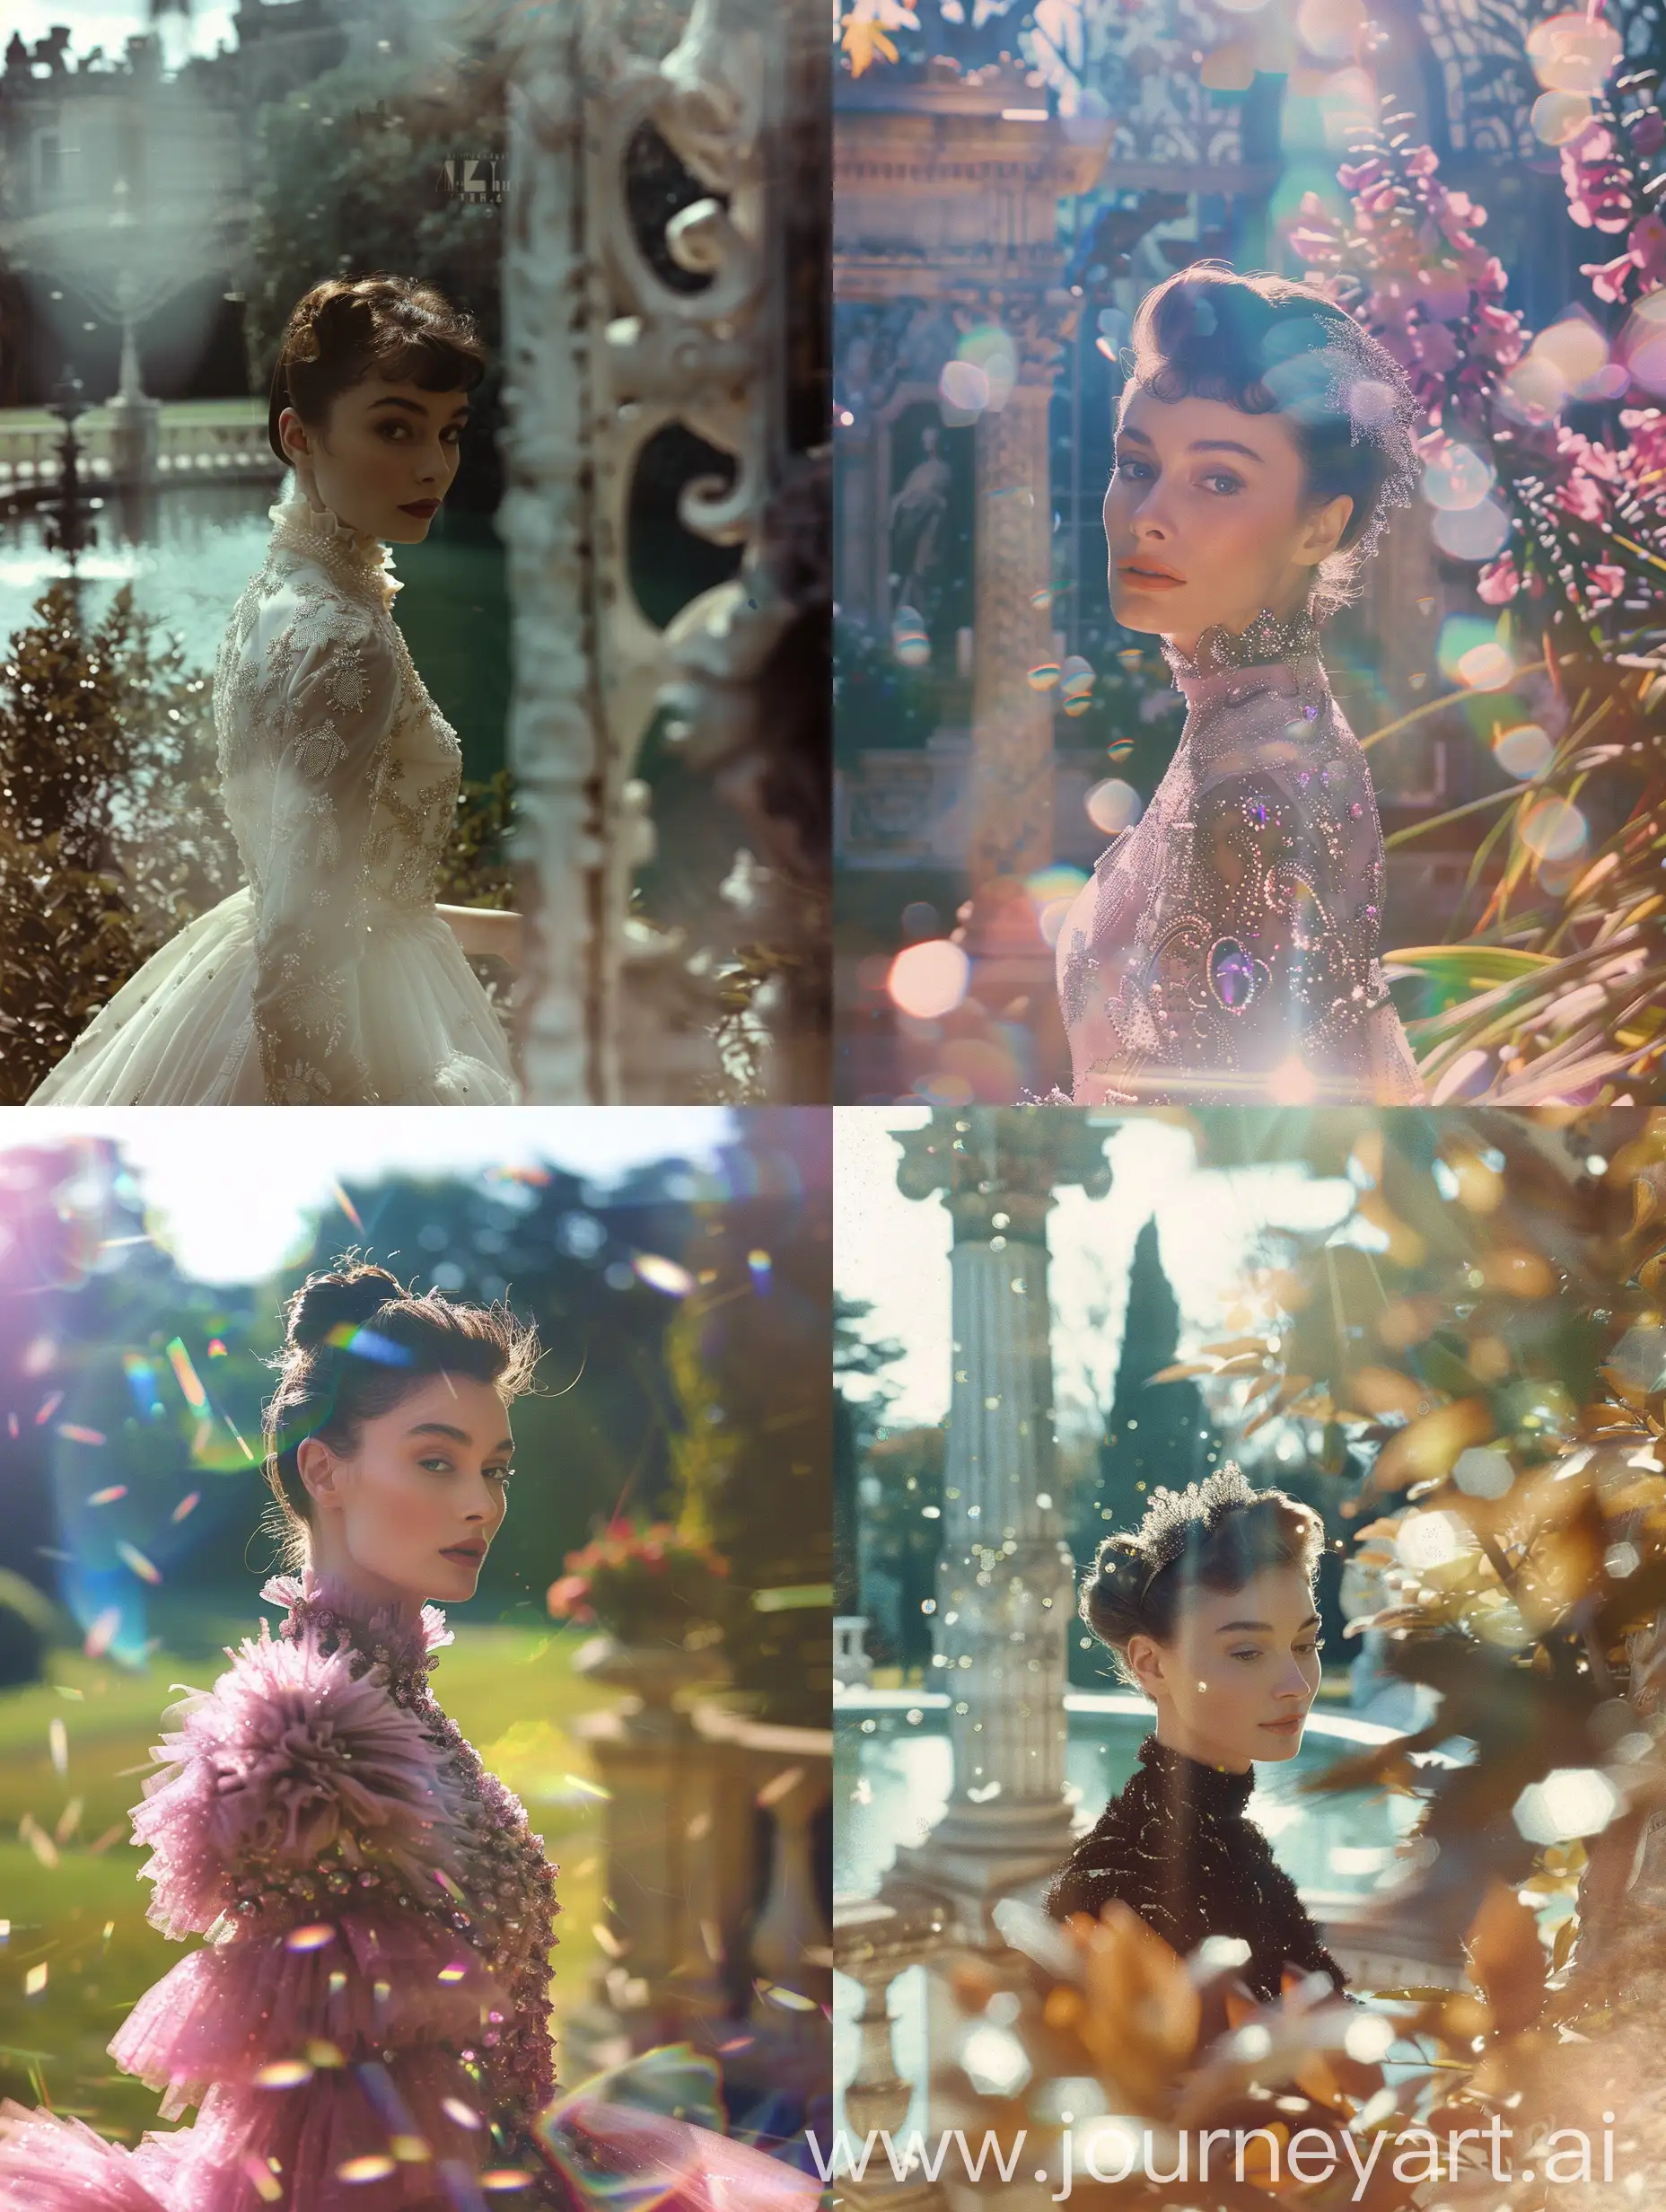 Audrey-HepburnInspired-Prada-Fashion-in-a-Palace-Garden